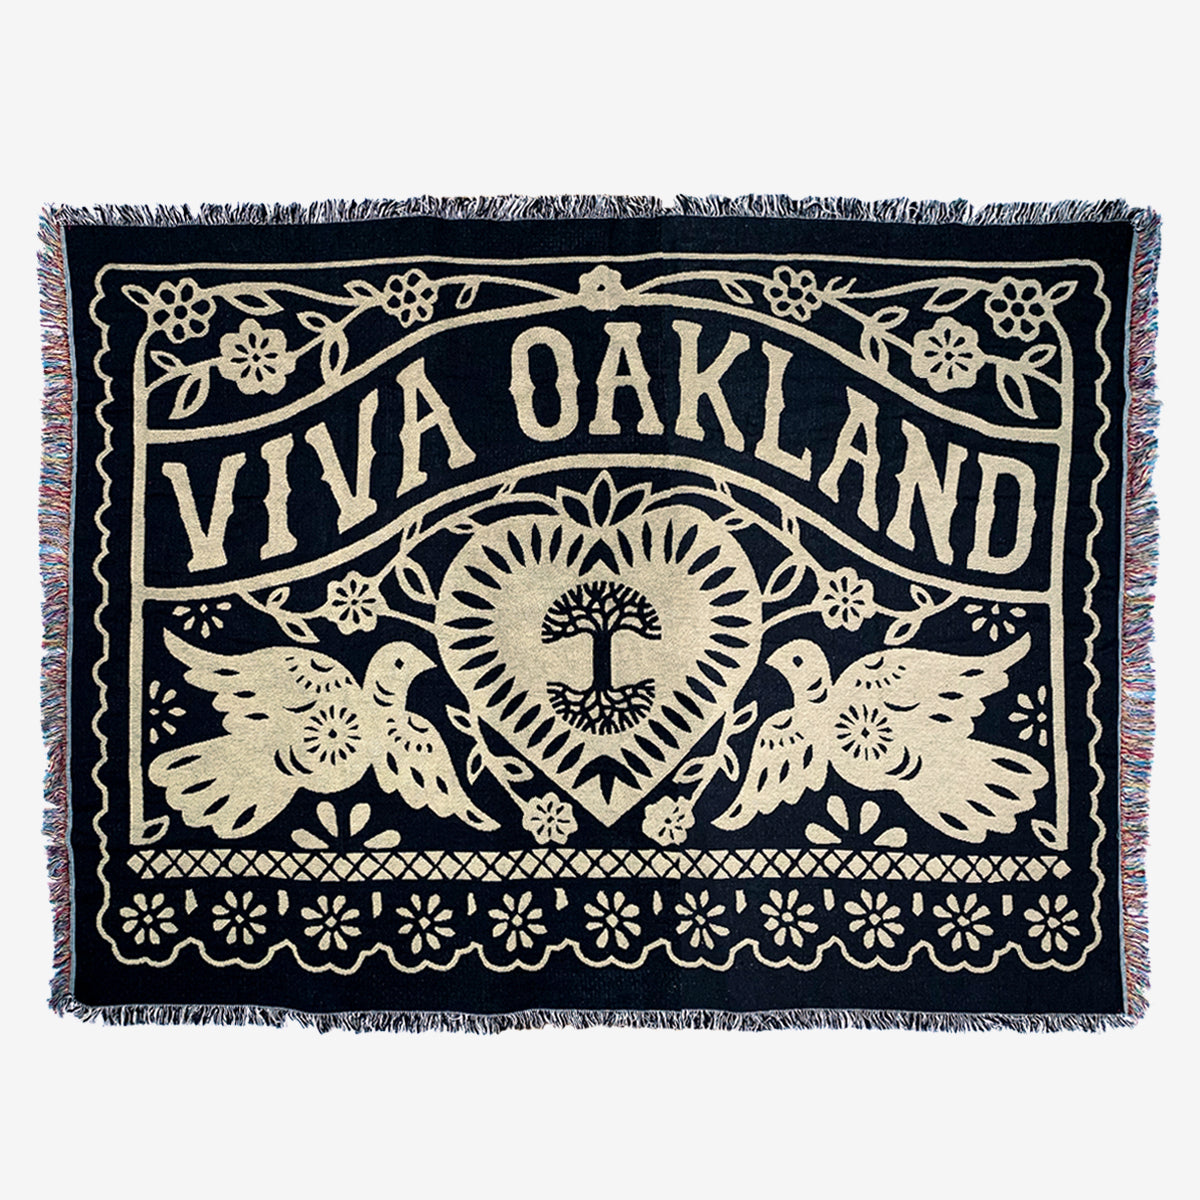 throw blanket - viva oakland - black and gold -100% cotton